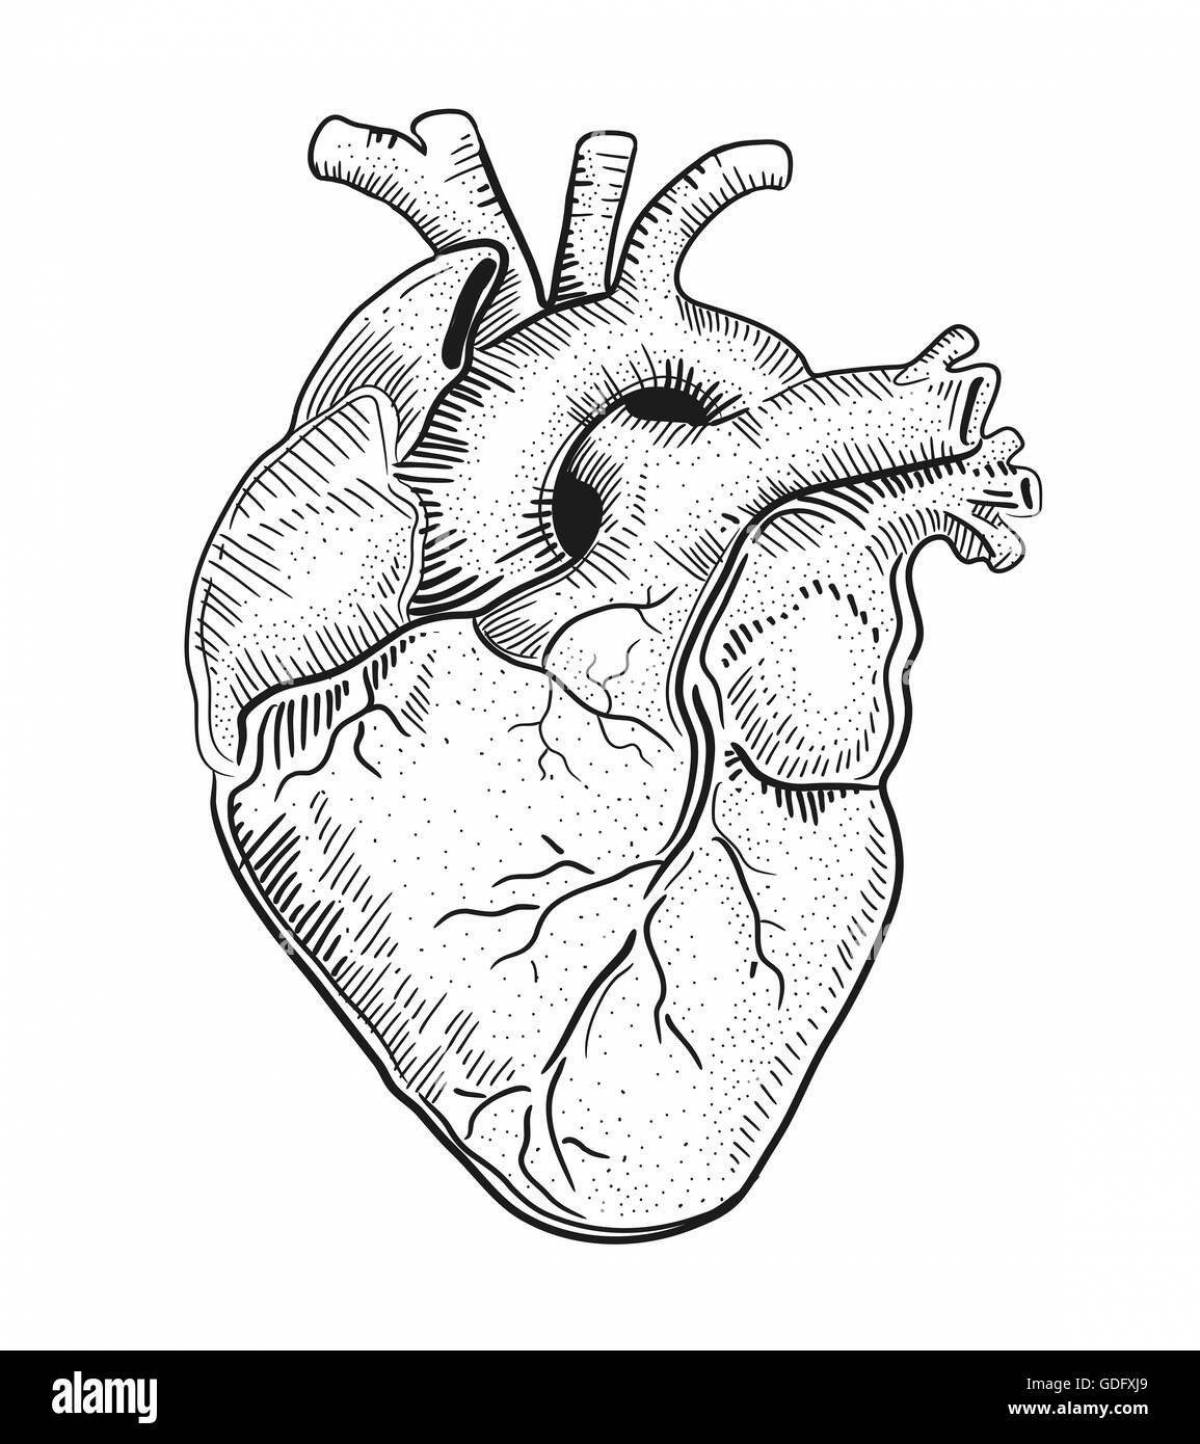 Сердце схематично